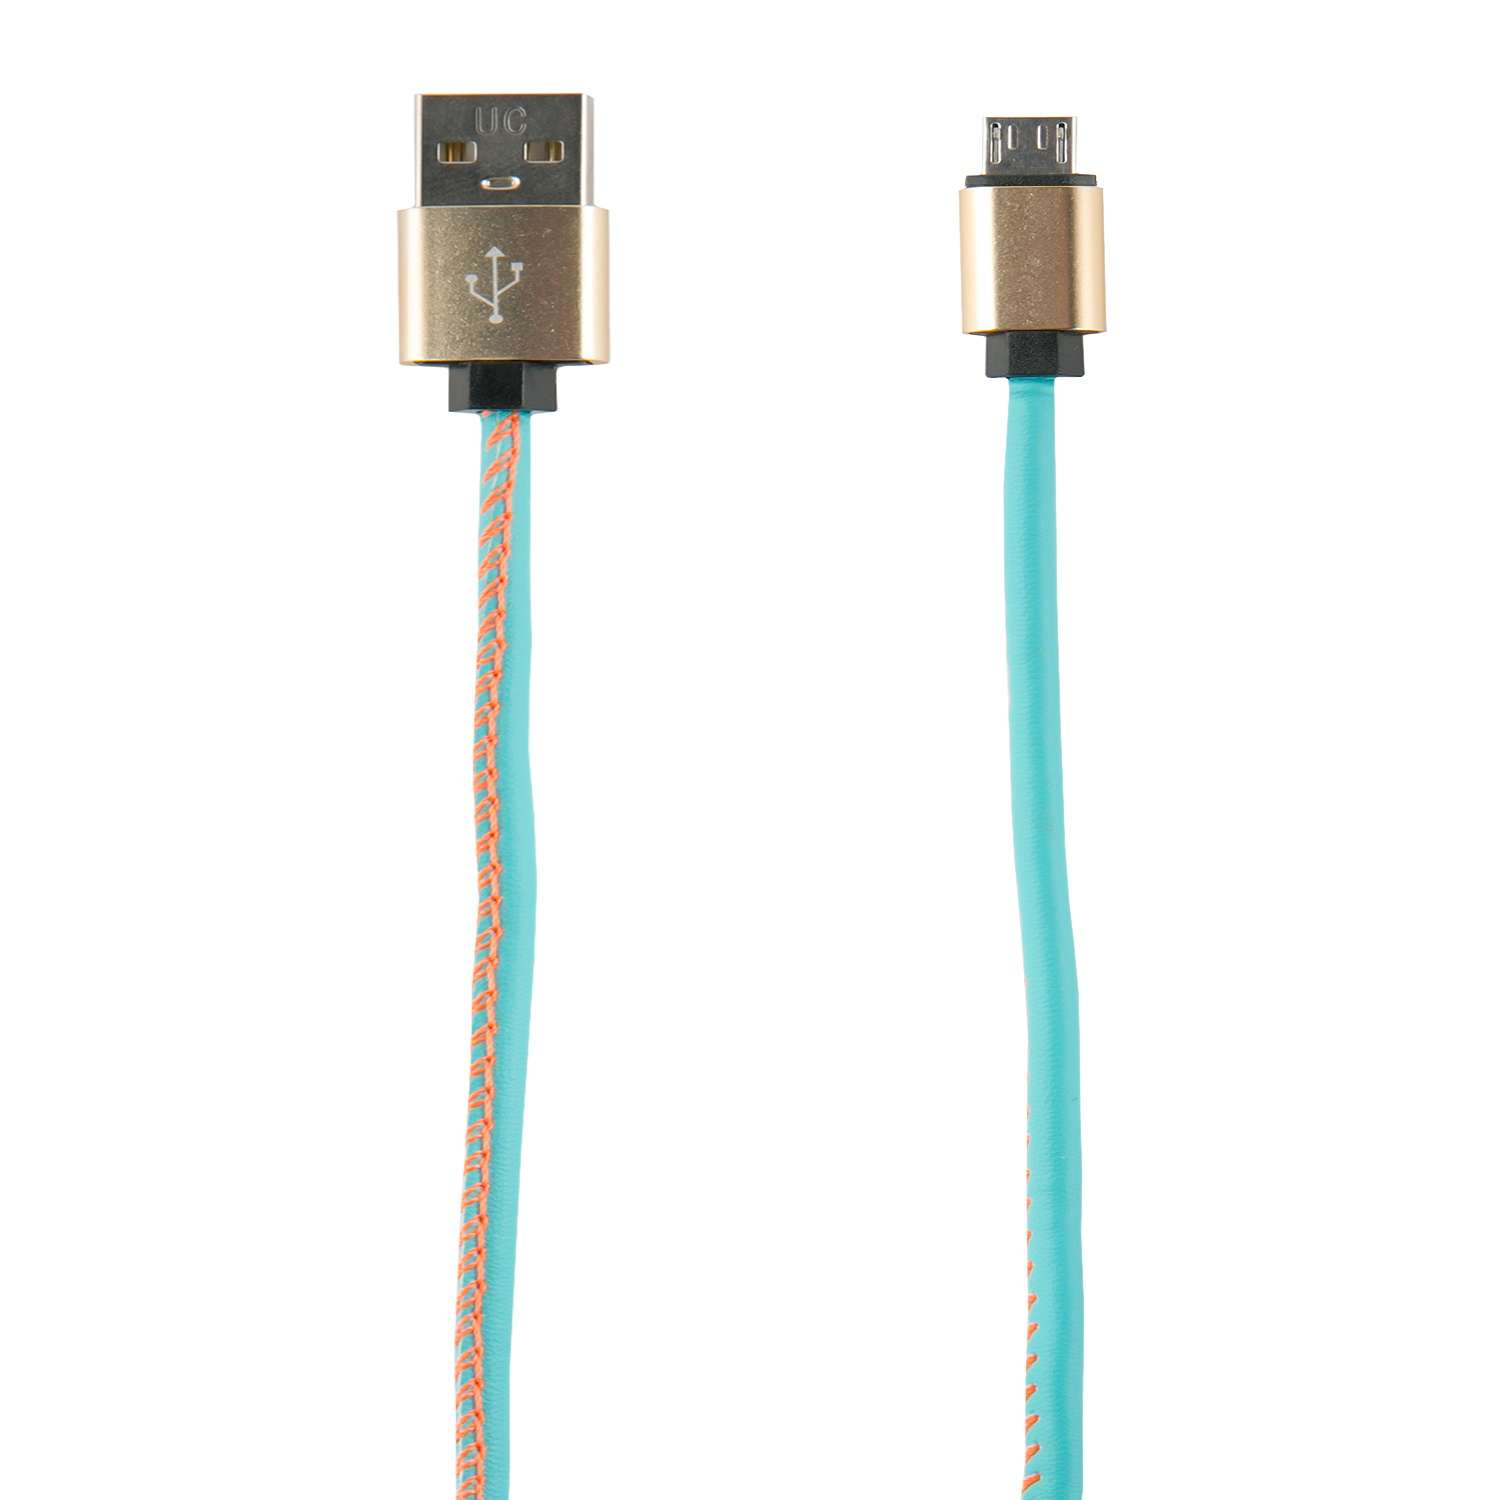 Дата-кабель RedLine USB - micro USB 2 метра оплетка экокожа синий - фото 2